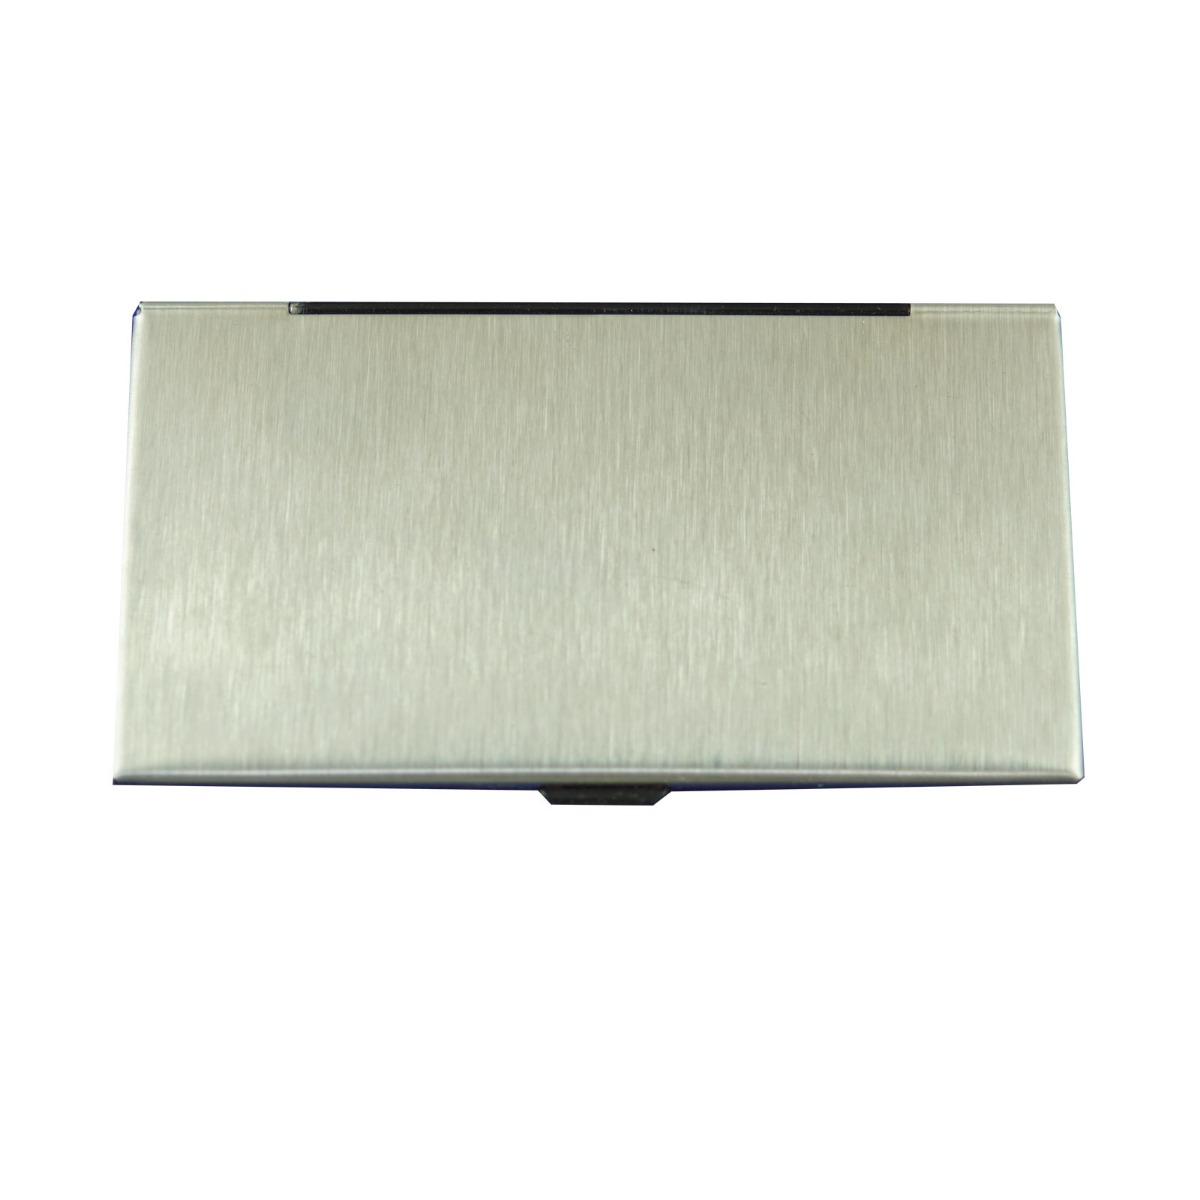 Penhouse Model No:87001 Silver Color Body Card Holder